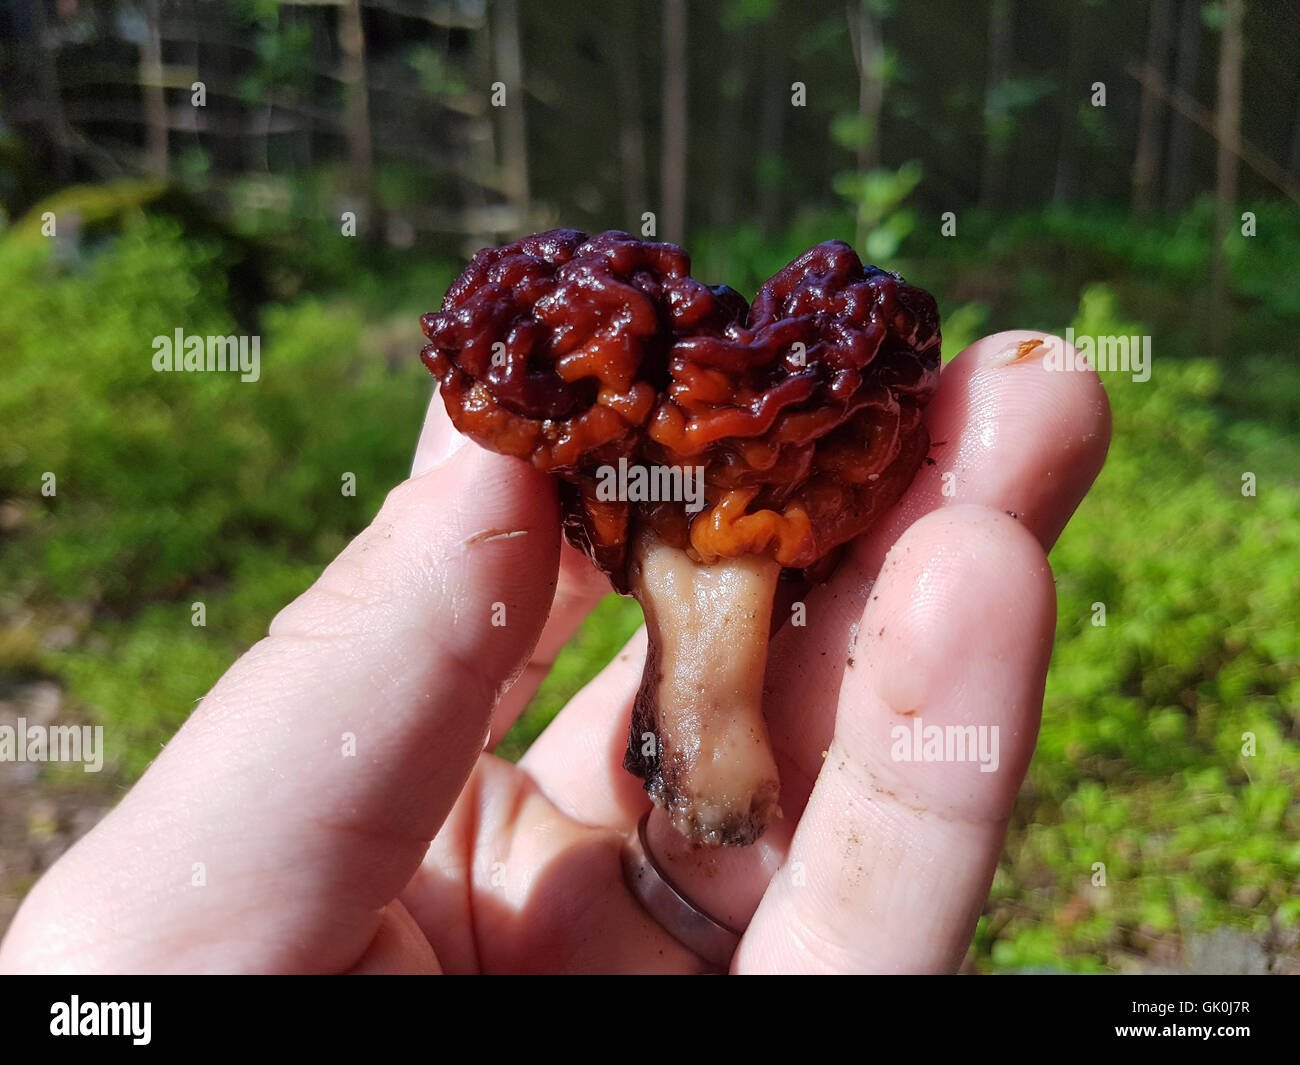 False morel or brain mushroom, Gyromitra esculenta, between fingers on a hand Stock Photo